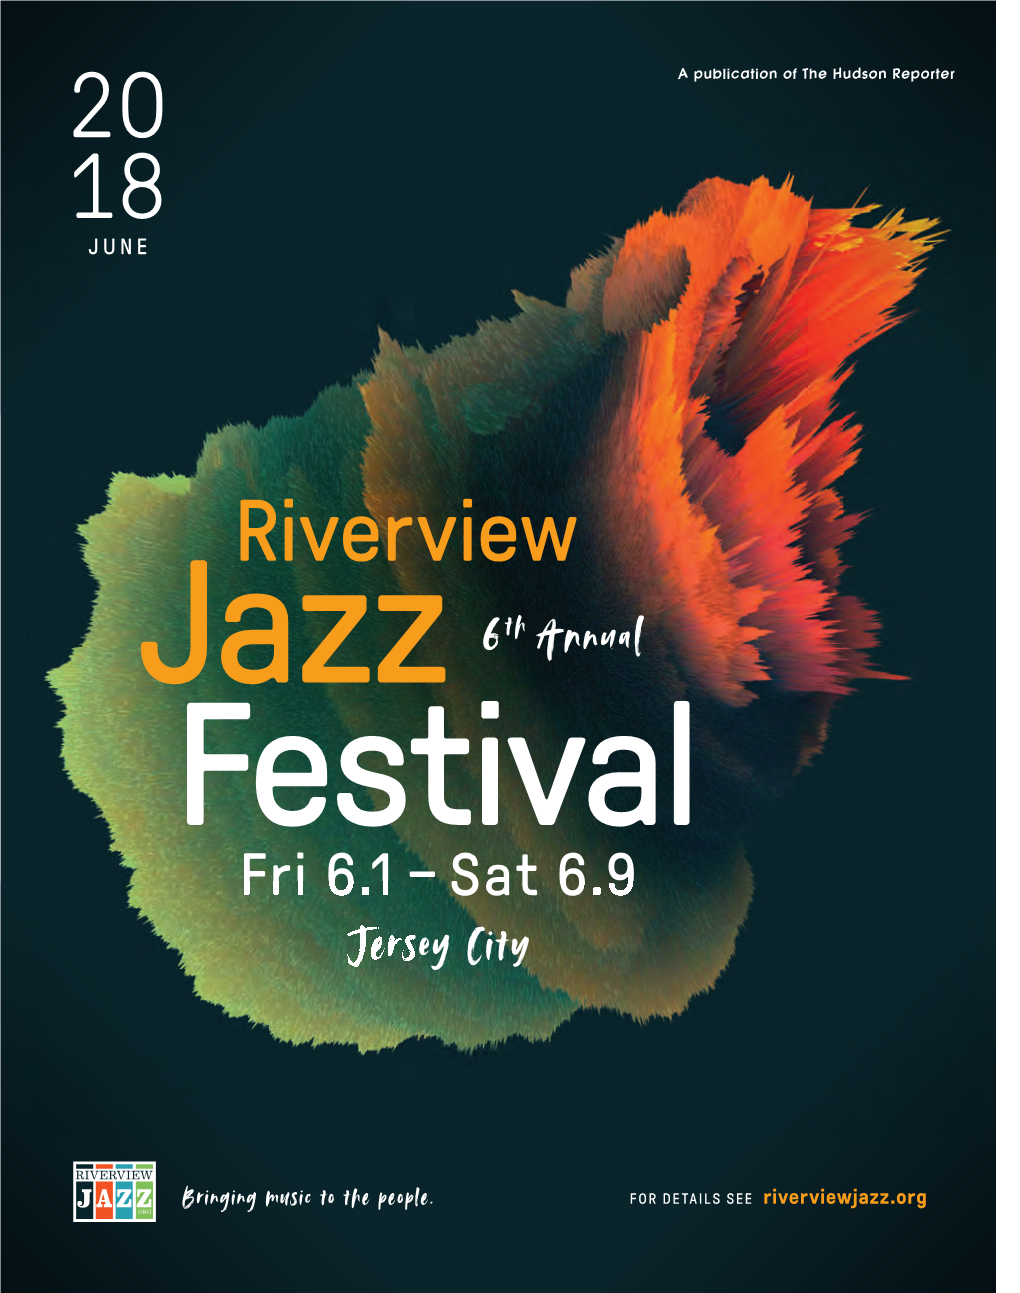 Riverview Jazz 6 Th Annual Festival Fri 6.1 – Sat 6.9 Jersey City